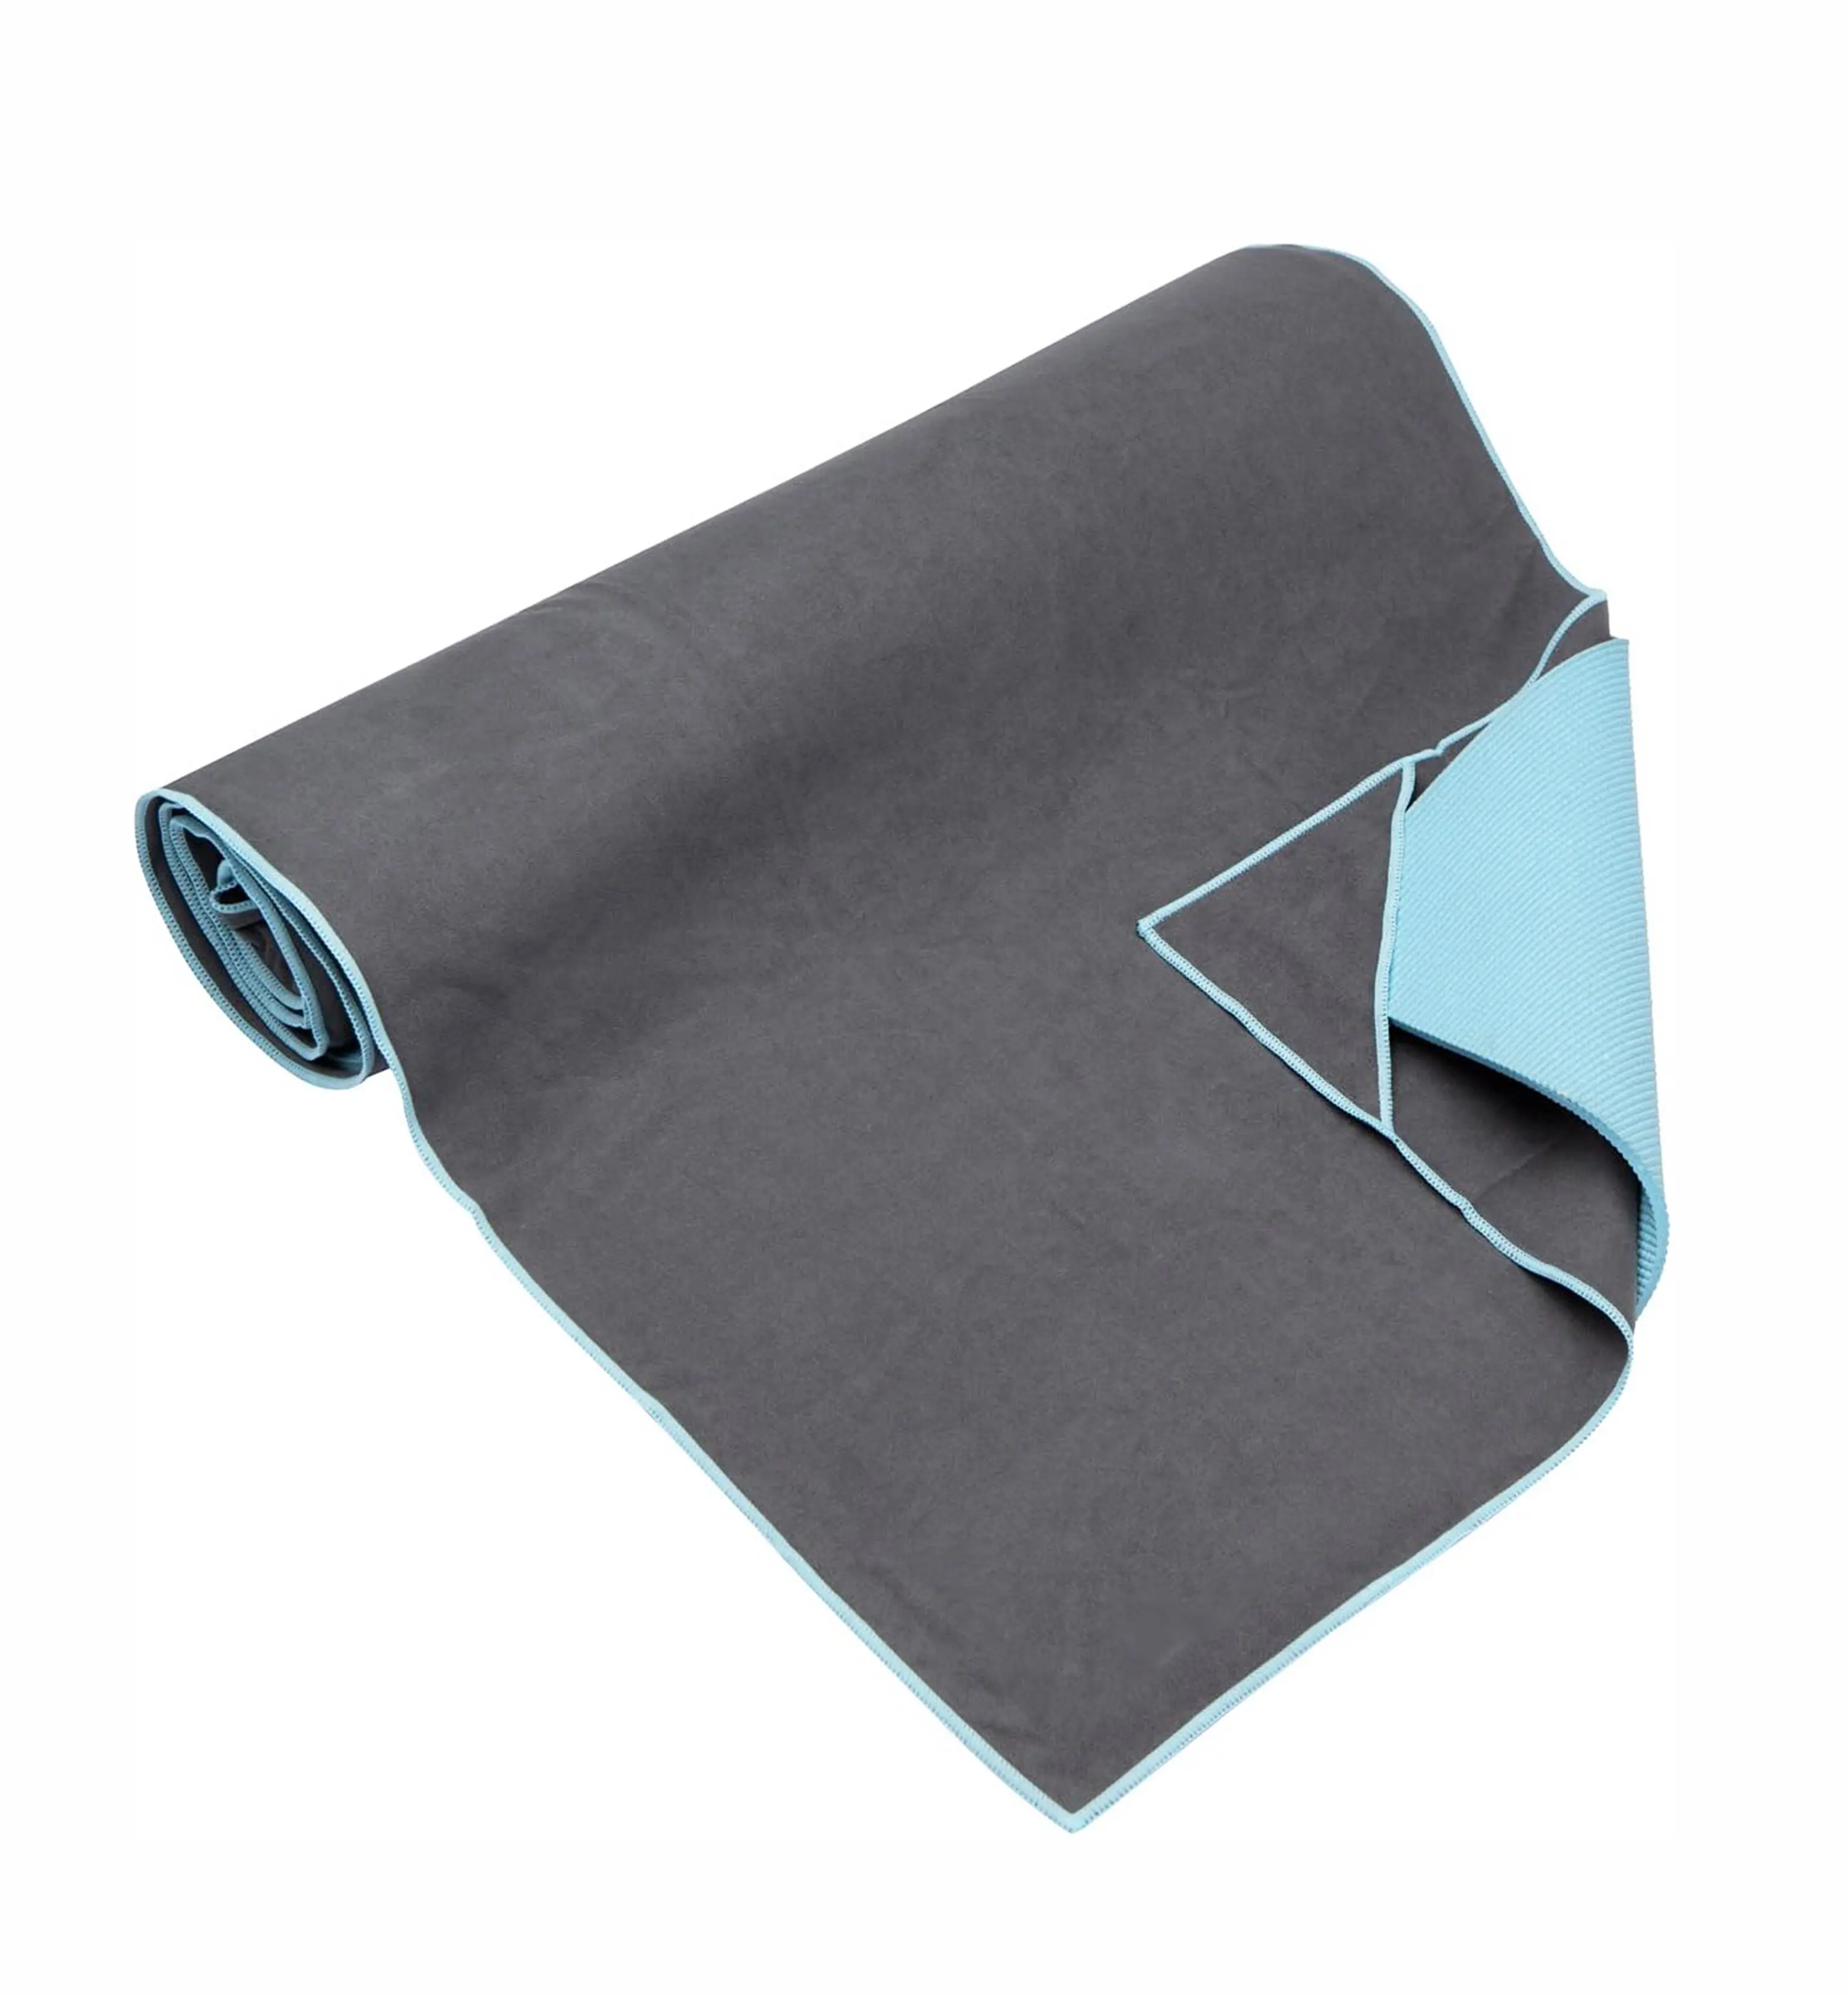 Eco-friendly microfiber non slip grip yoga fitness sports towel with custom stay-put corner pocket